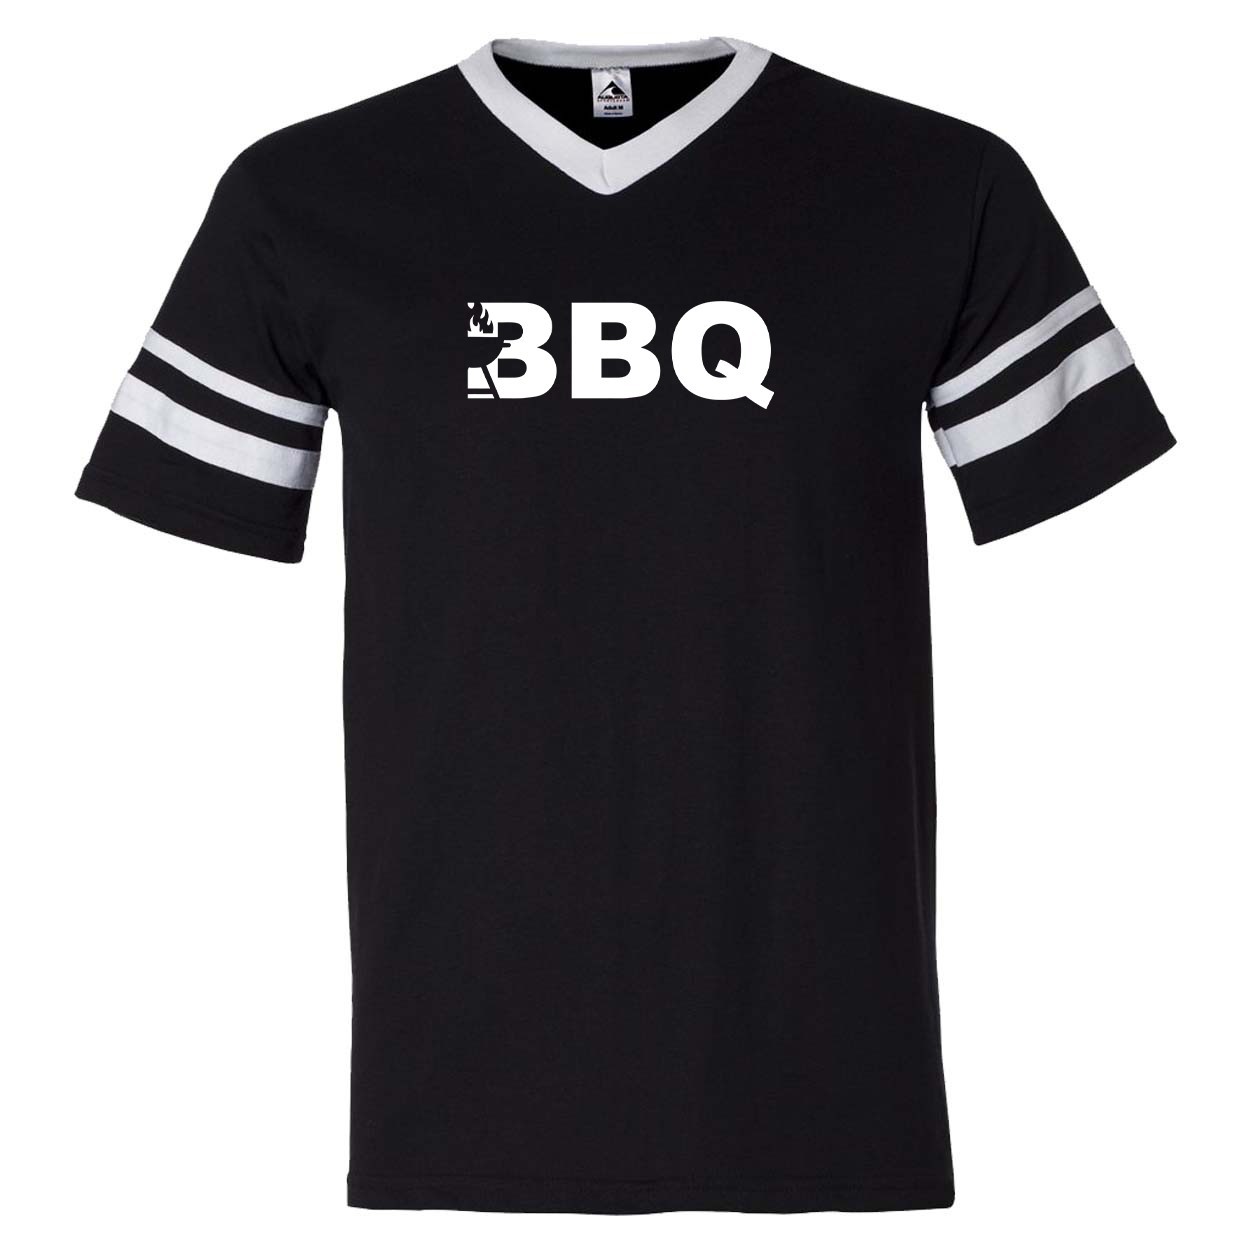 BBQ Grill Logo Classic Premium Striped Jersey T-Shirt Black/White (White Logo)